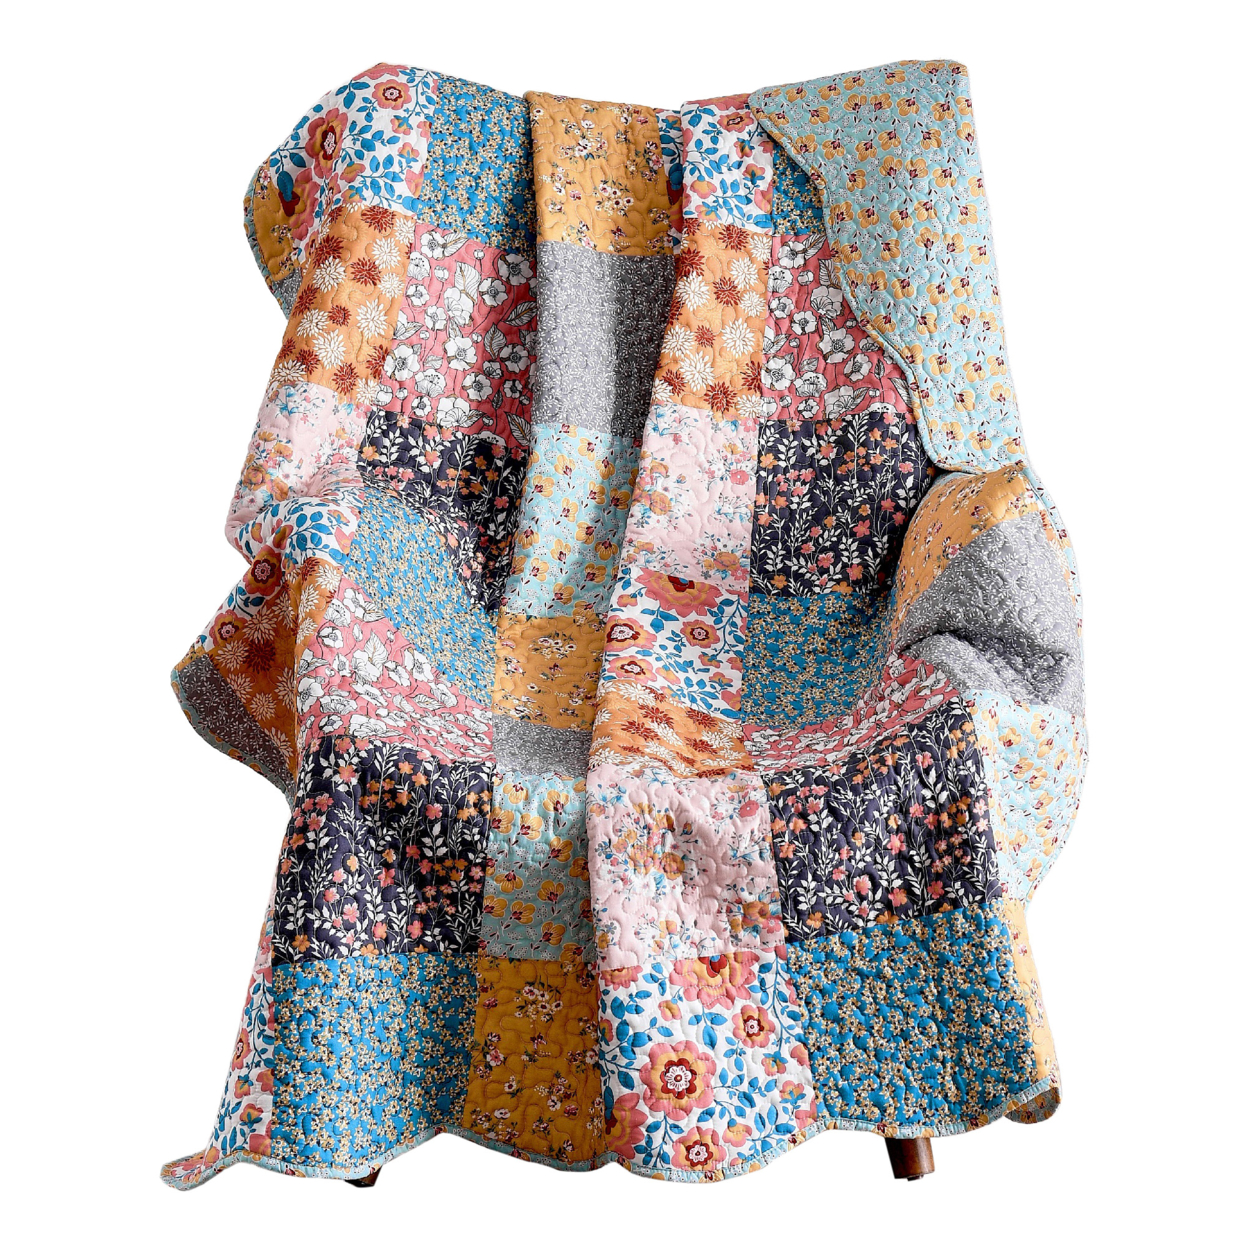 Turin 60 Inch Throw Blanket, Microfiber, Patchwork Floral Print, Multicolor- Saltoro Sherpi